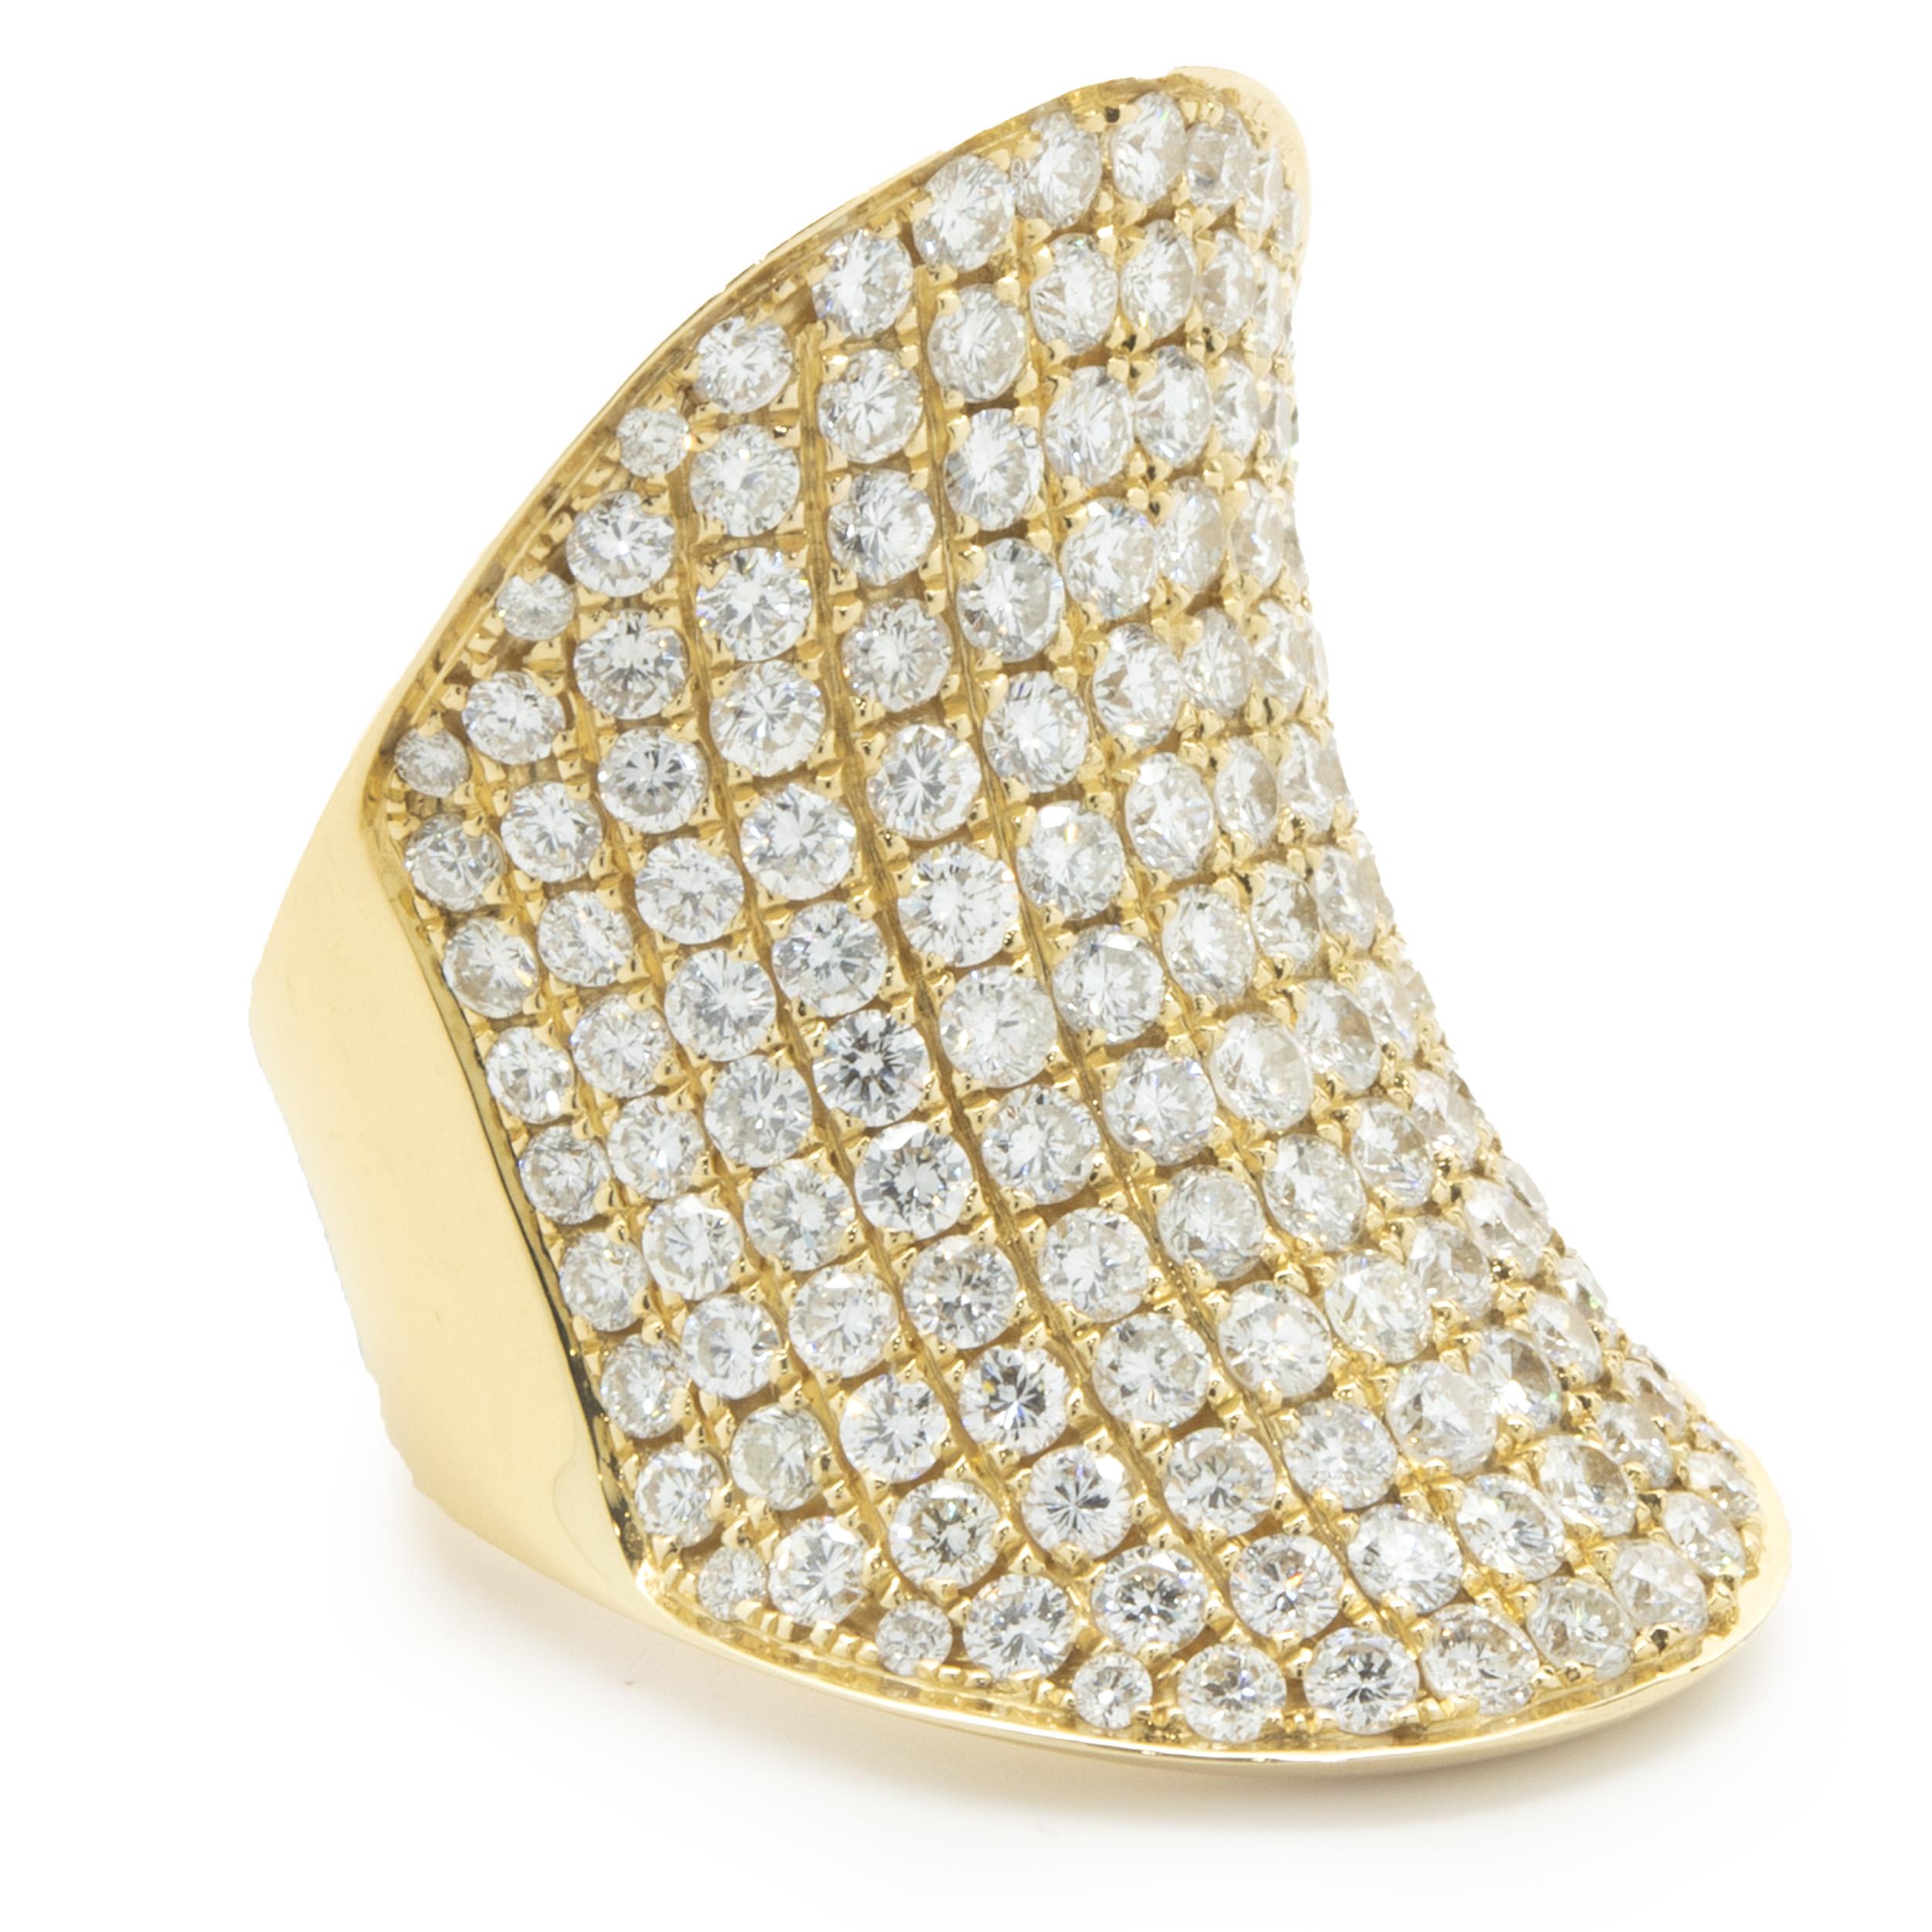 Designer: custom
Material: 18K yellow gold
Diamond: 157 round brilliant cut = 5.33cttw
Color: G
Clarity: VS2
Weight: 24.38 grams
